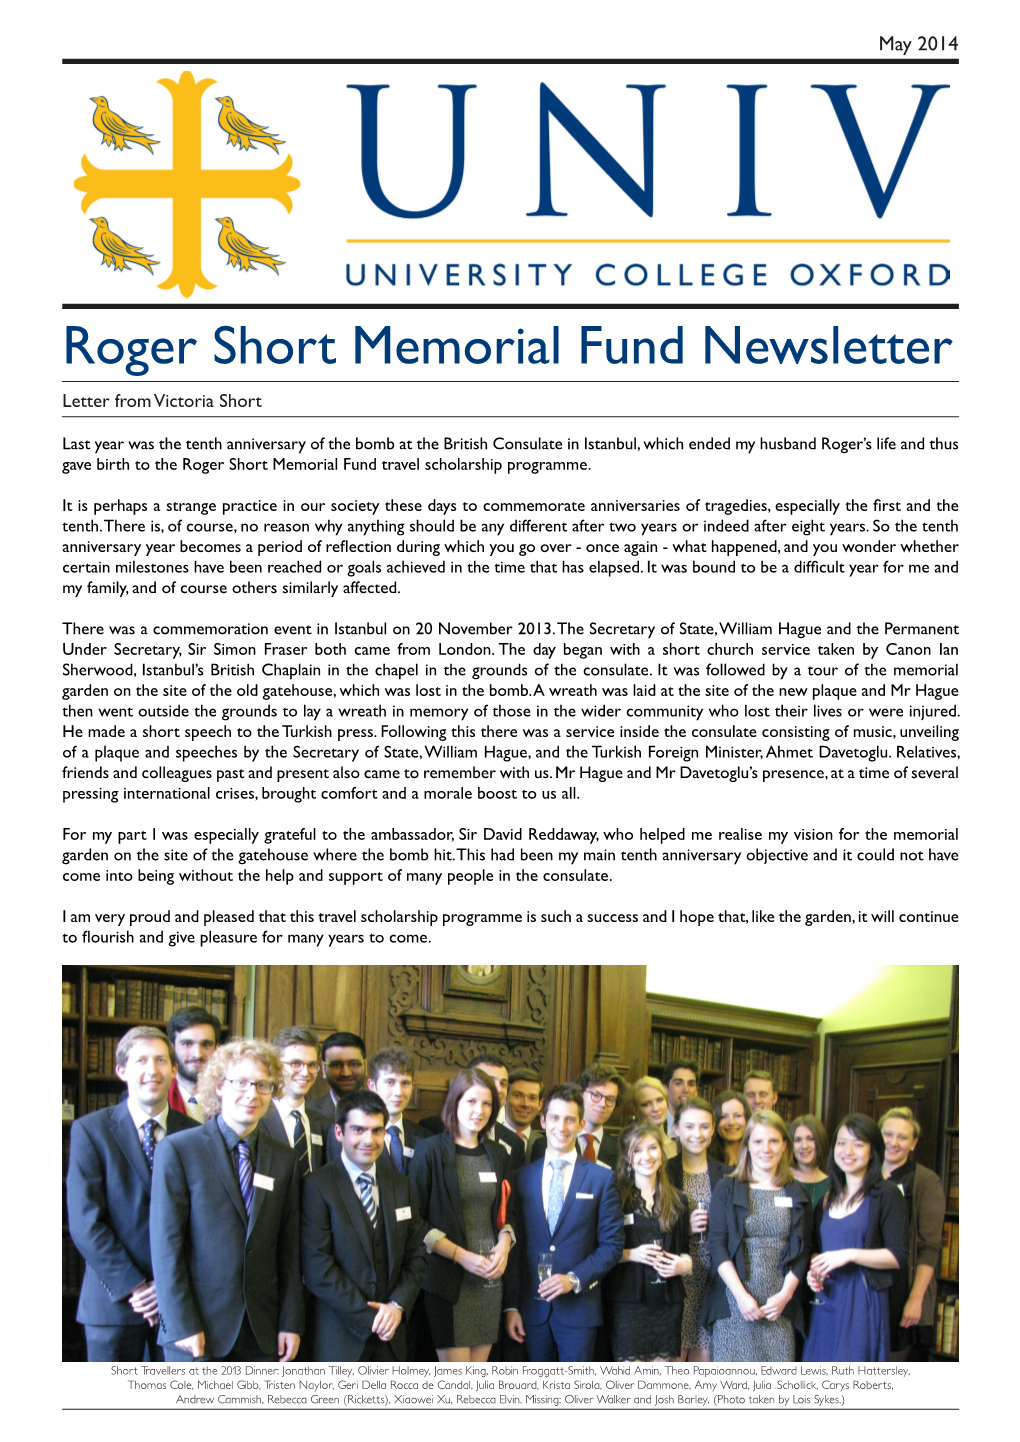 Roger Short Memorial Fund Newsletter Letter from Victoria Short